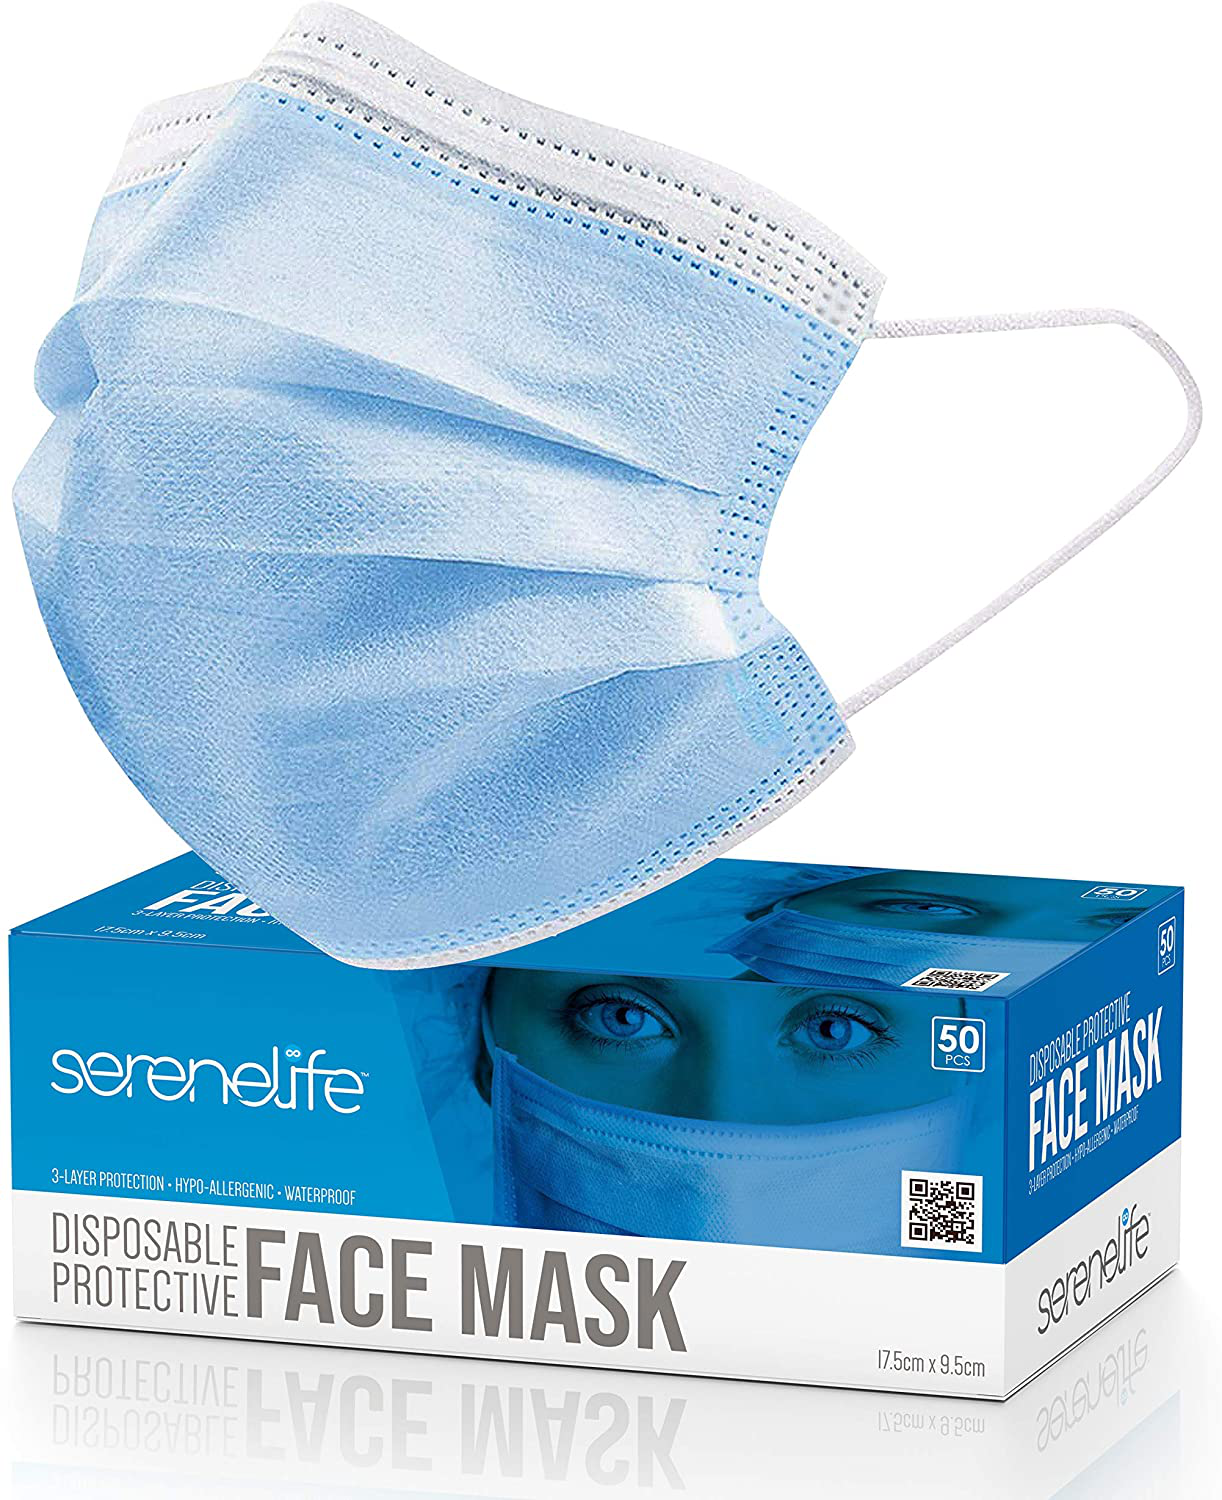 50 PCS Disposable Face Masks - 3 Layer Protection Face Masks